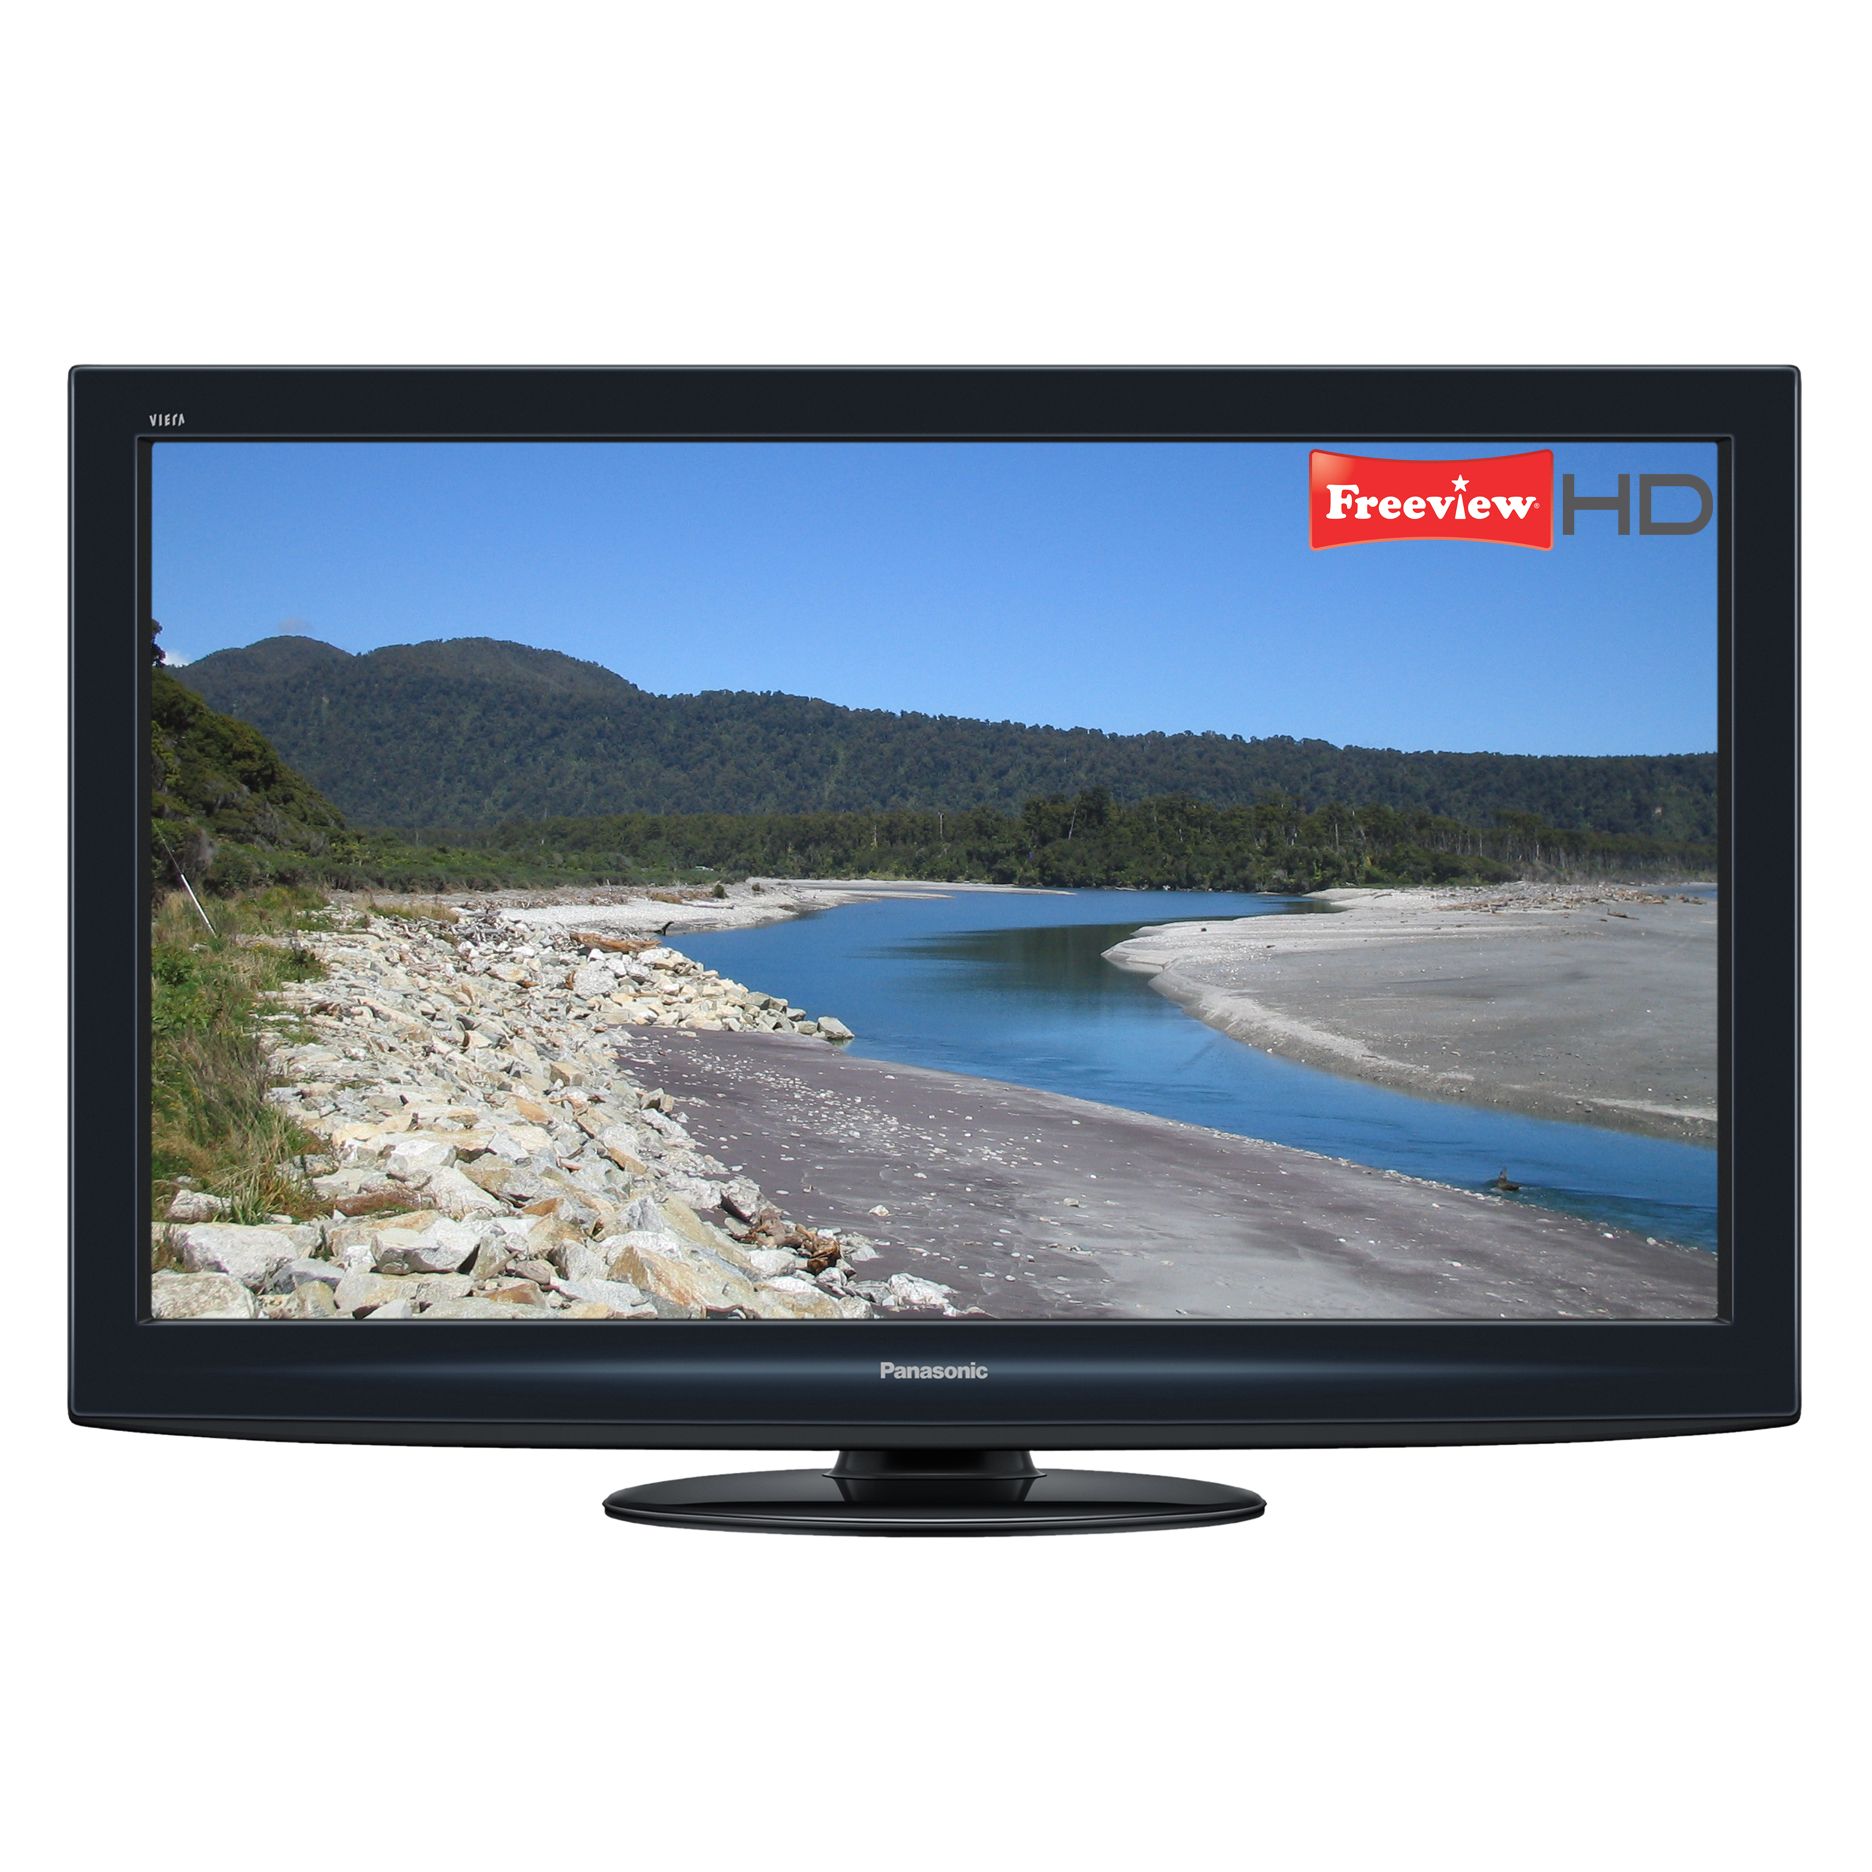 Panasonic Viera TX-P50G20B Plasma HD 1080p TV, 50" with Built-in freesat & Freeview HD at JohnLewis